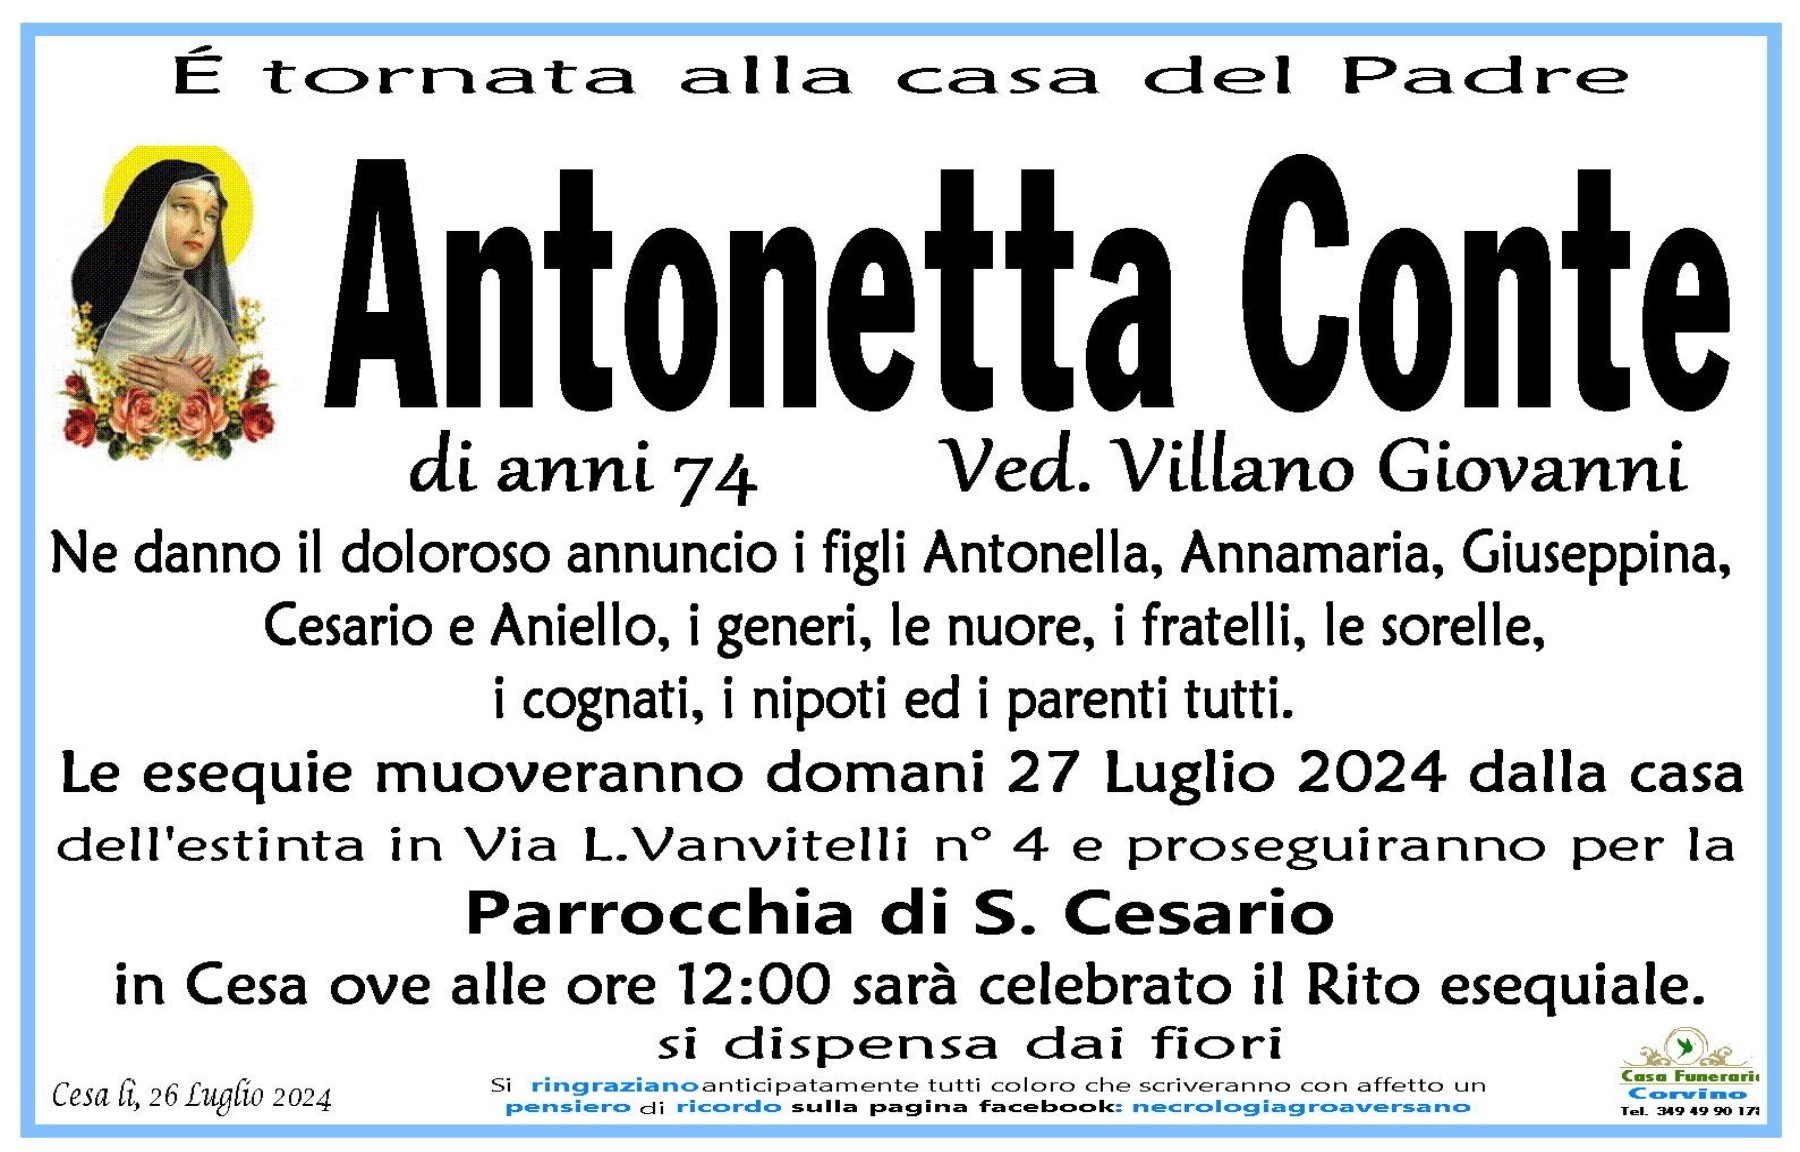 Antonetta Conte